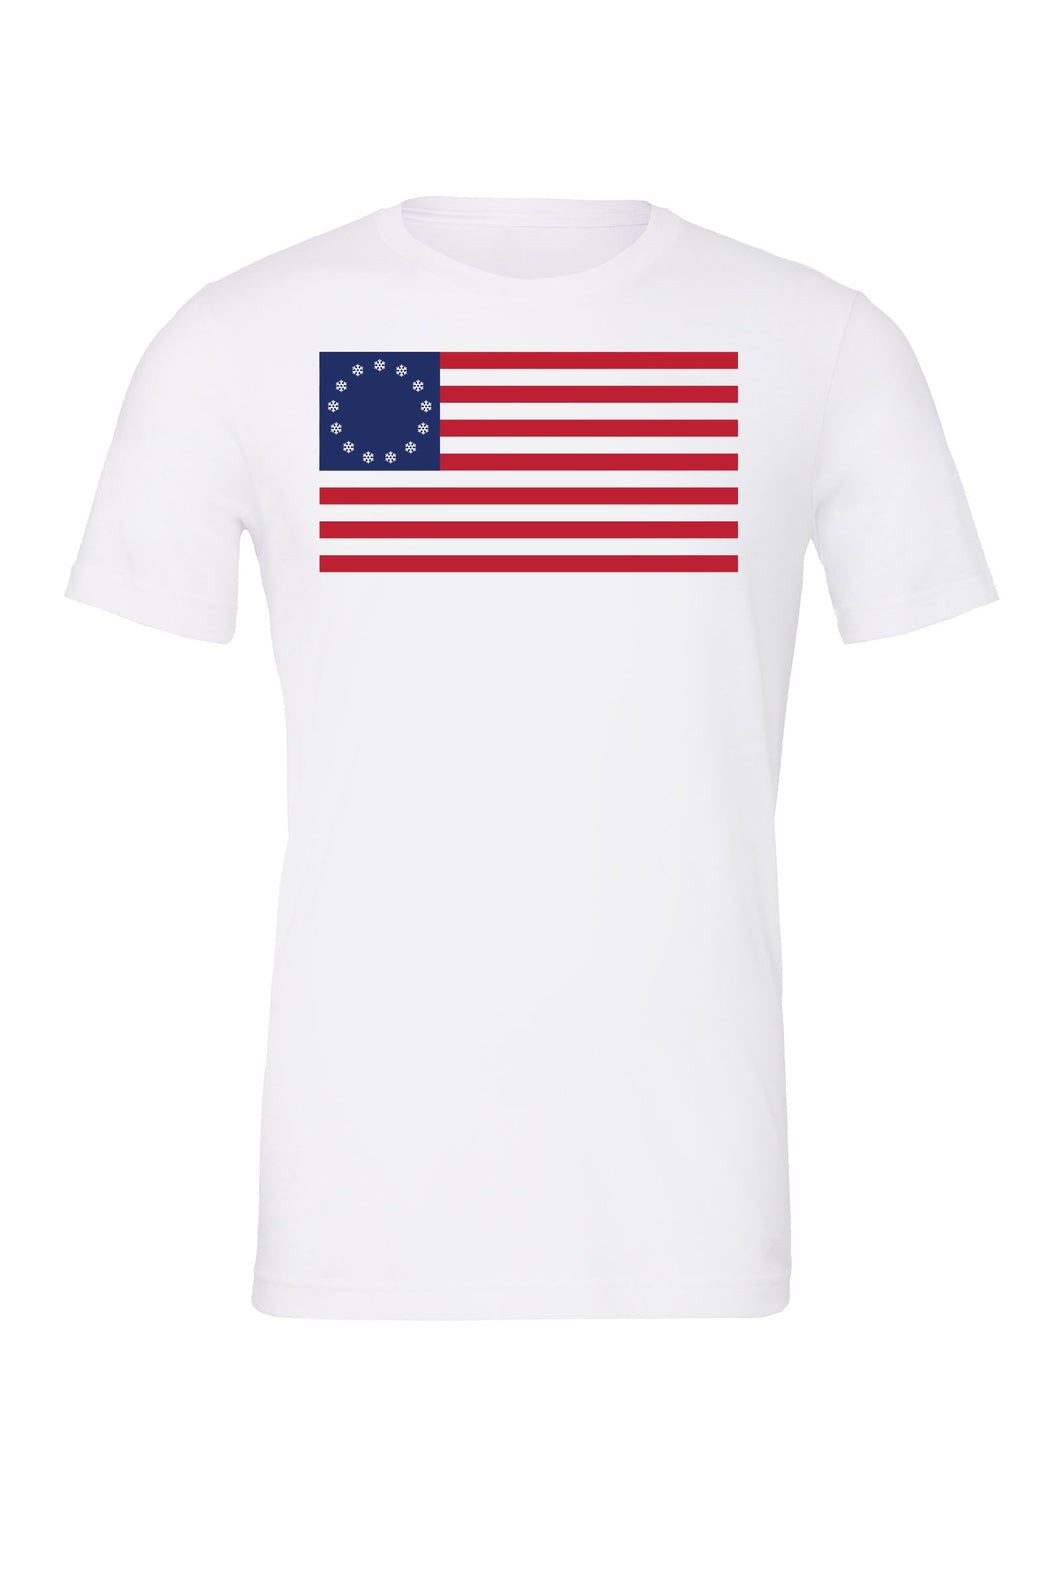 Betsy Ross Flag Snowflake T-Shirt